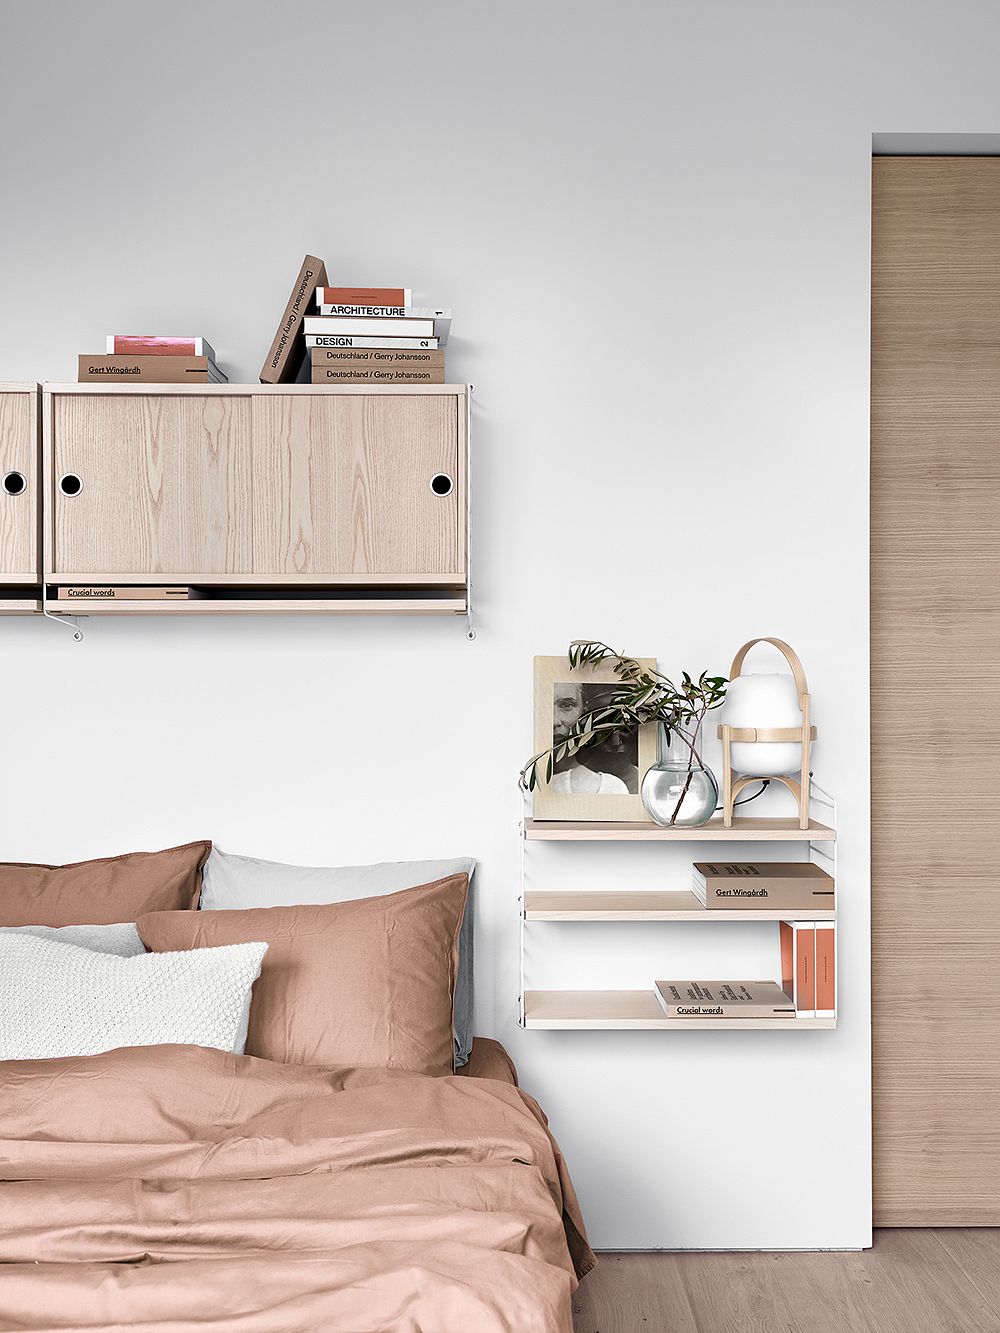 String Furniture's String Cabinet and String Pocket shelves in a bedroom.